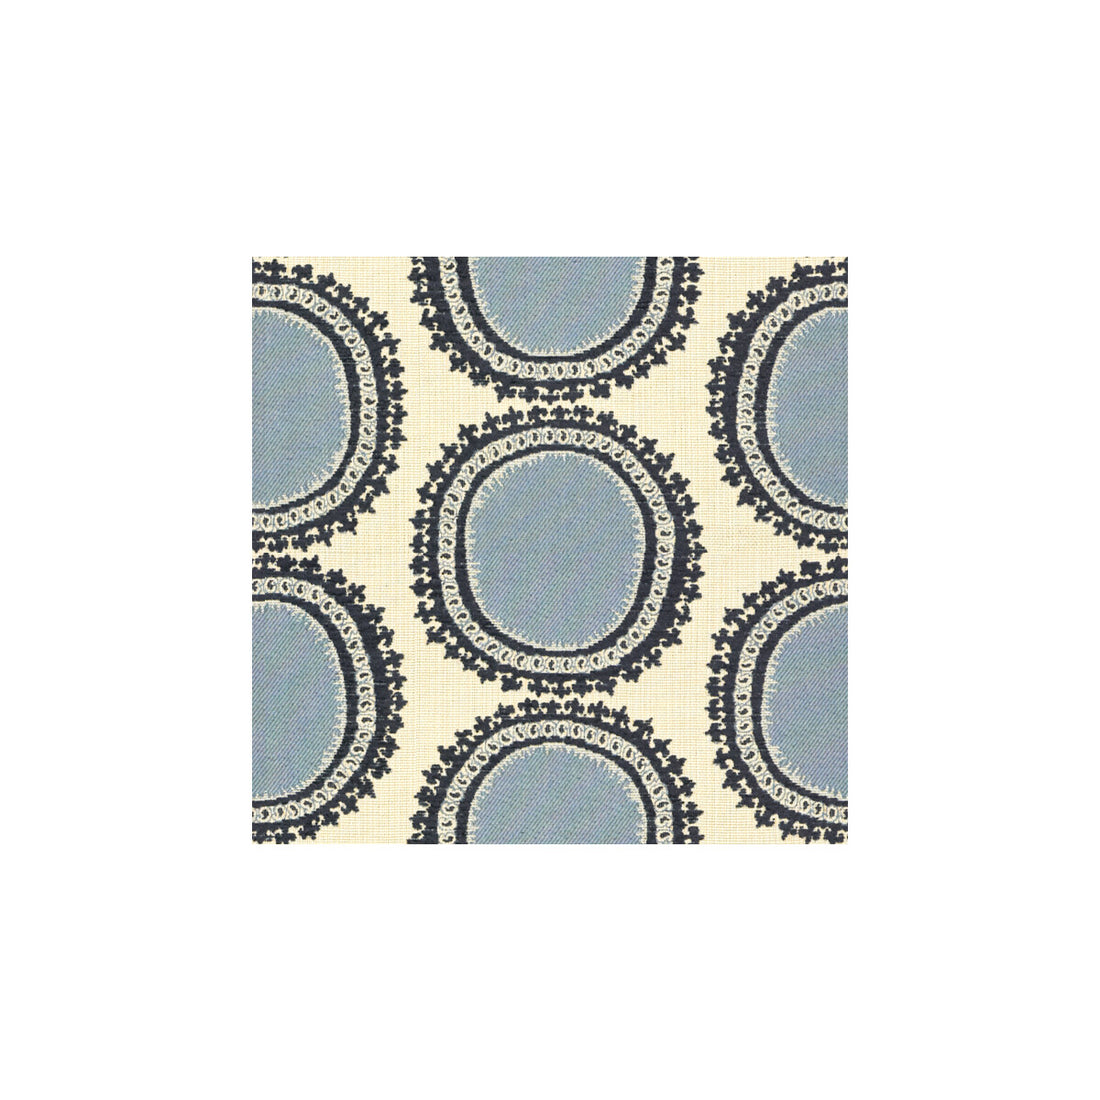 Kravet Design fabric in 31421-1615 color - pattern 31421.1615.0 - by Kravet Design in the Gis collection